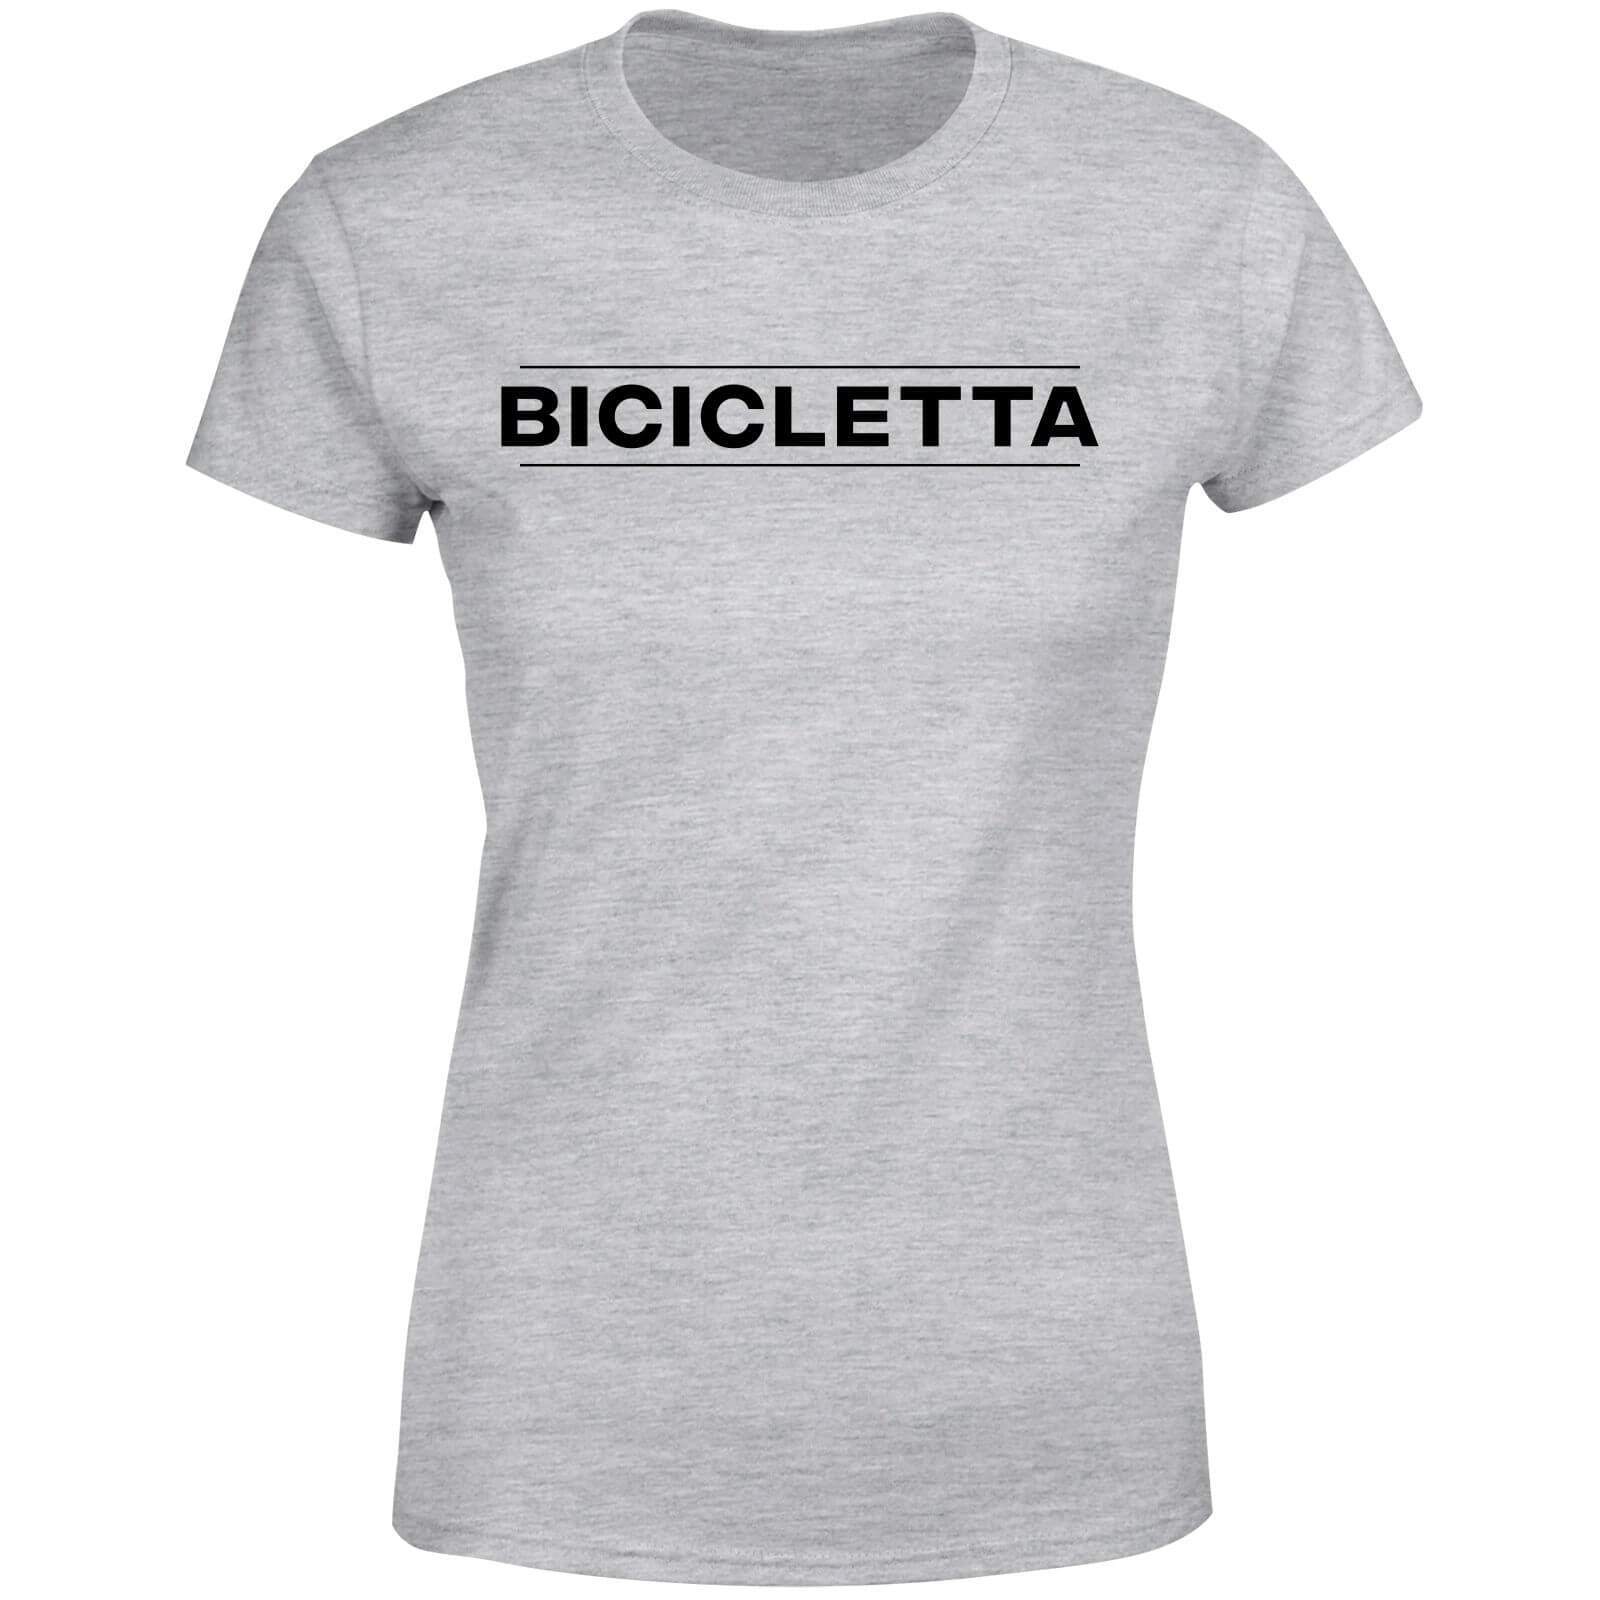 Bicicletta Women's T-Shirt - Grey - 4XL - Grey